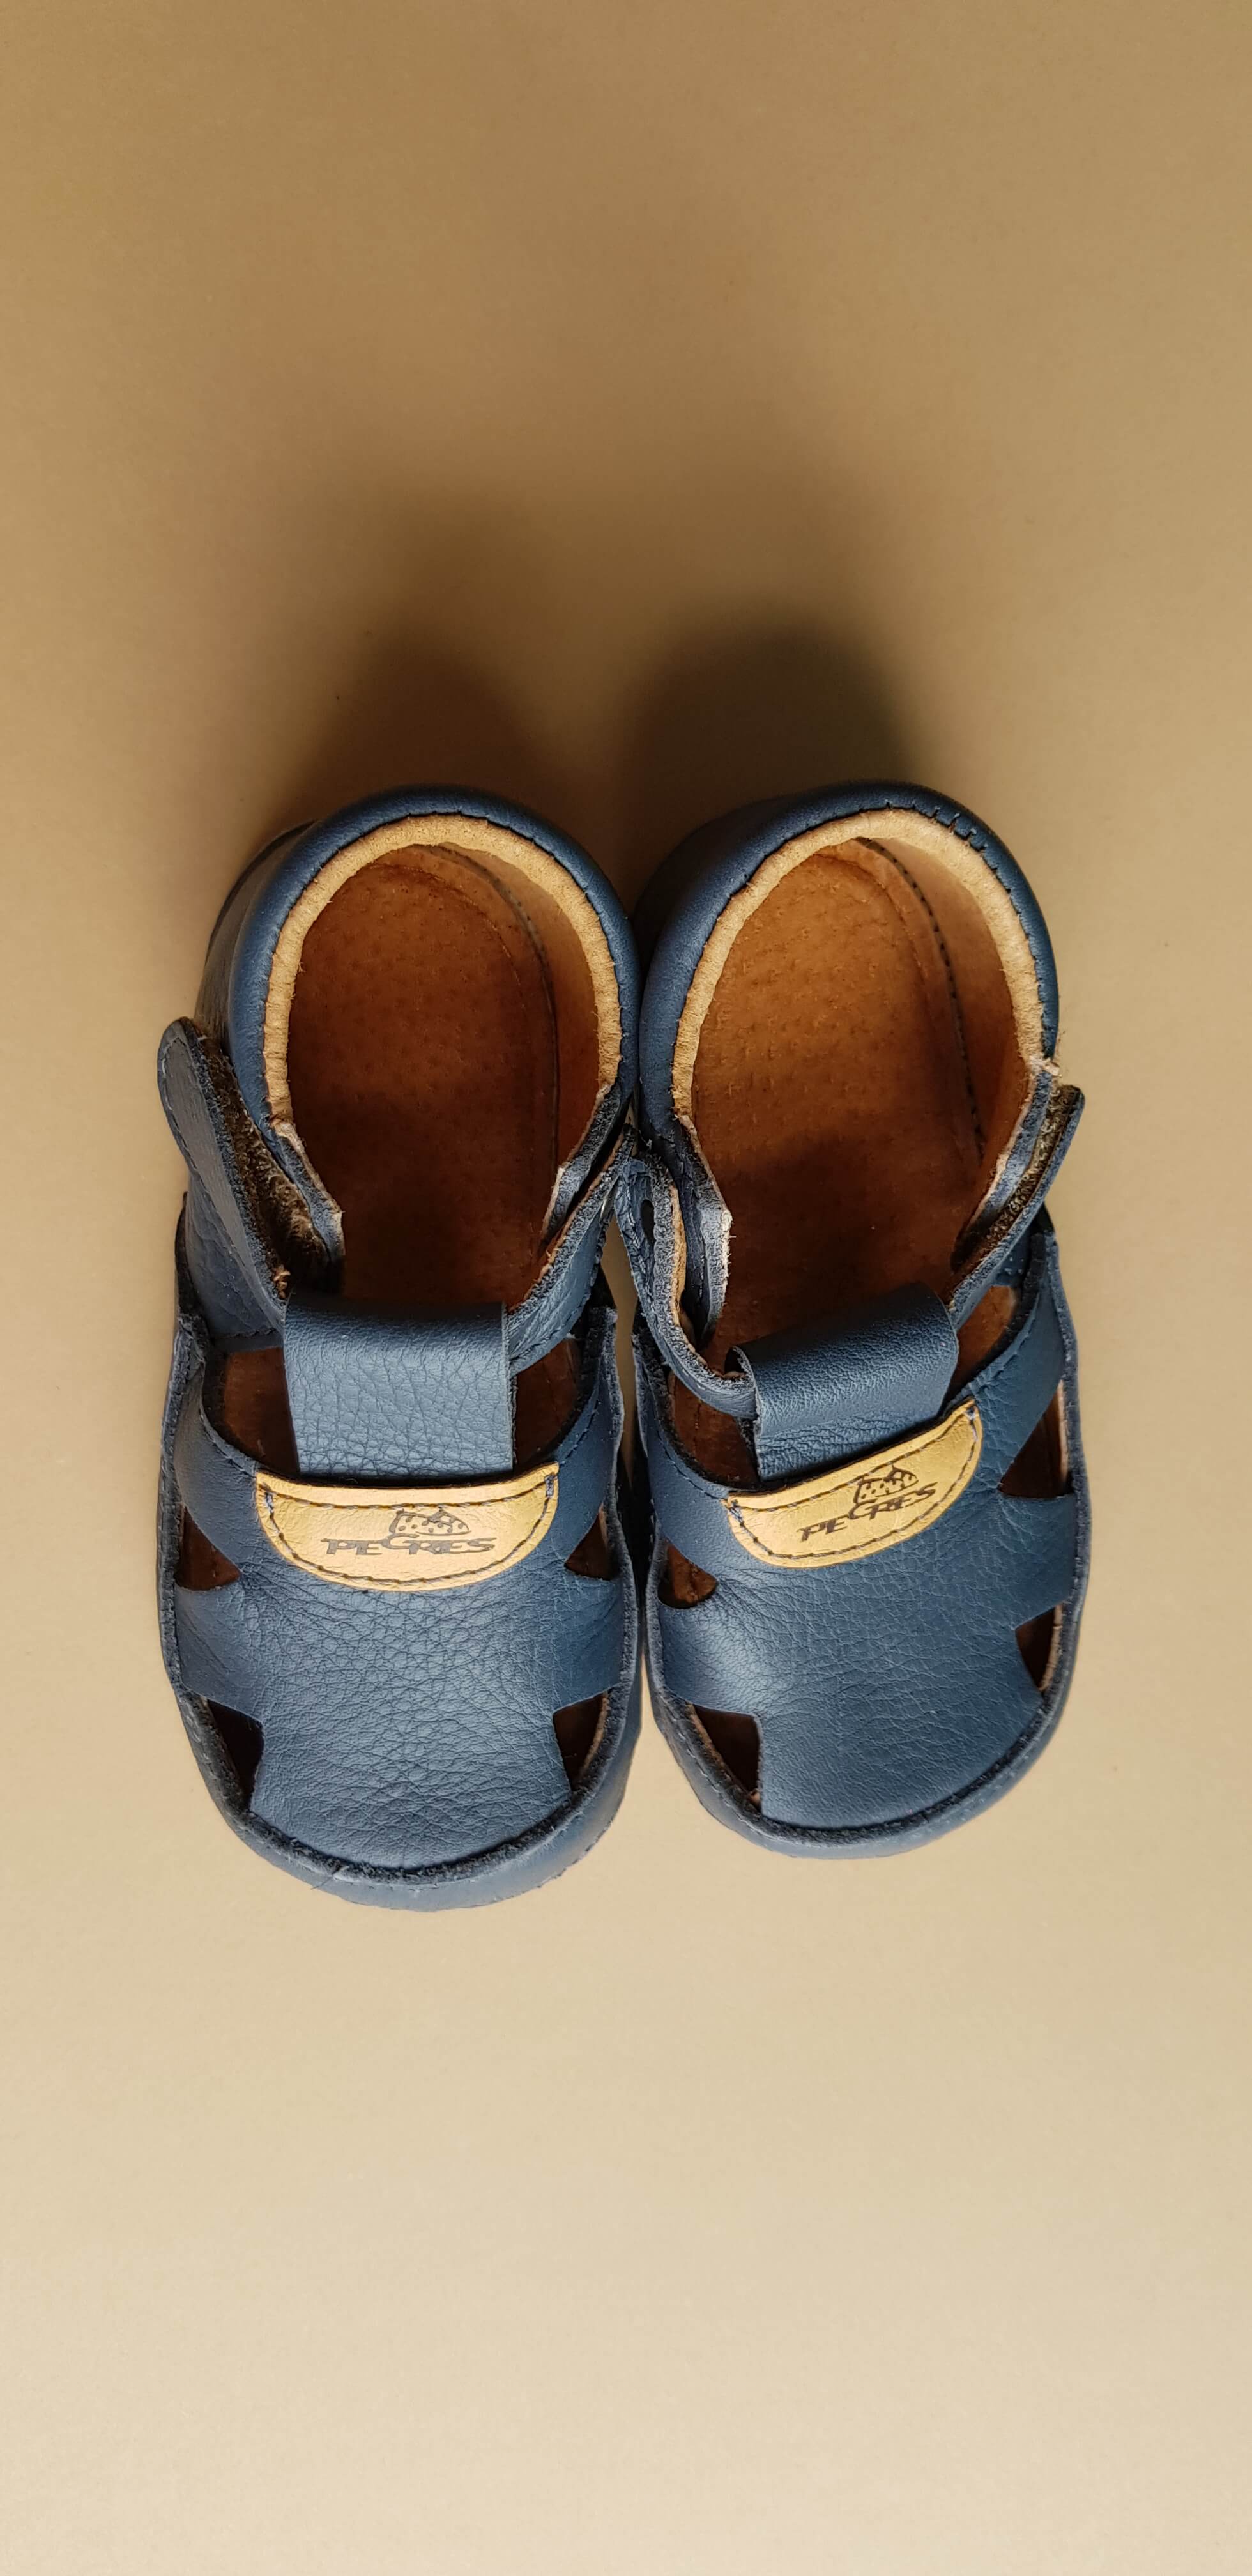 Barefoot Kid's Sandals - Navy